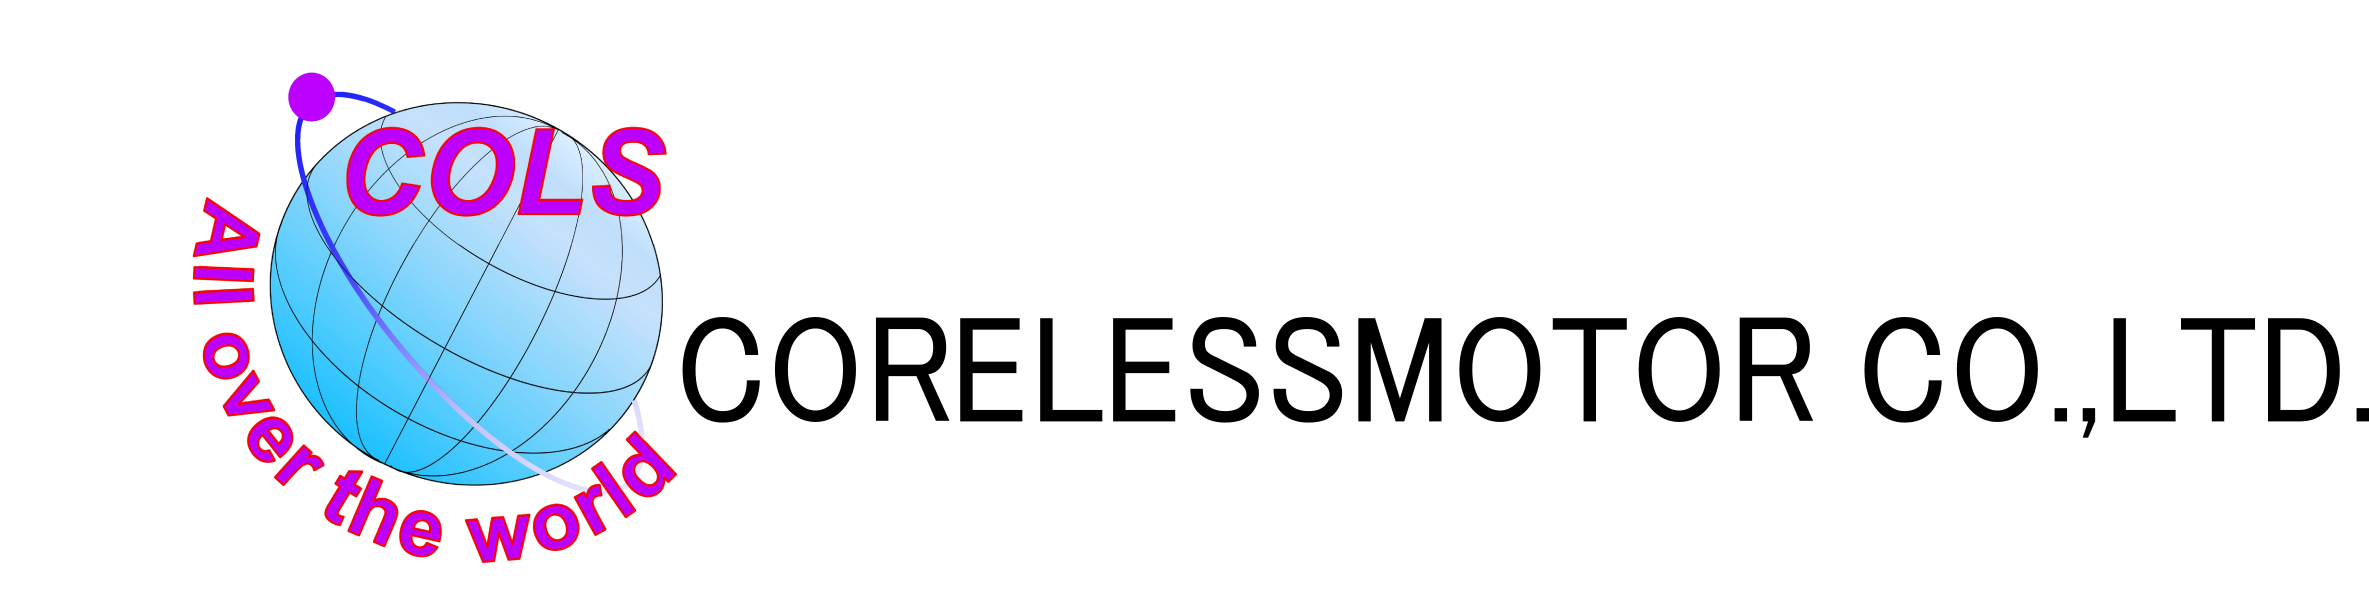 Coreless Motor logo